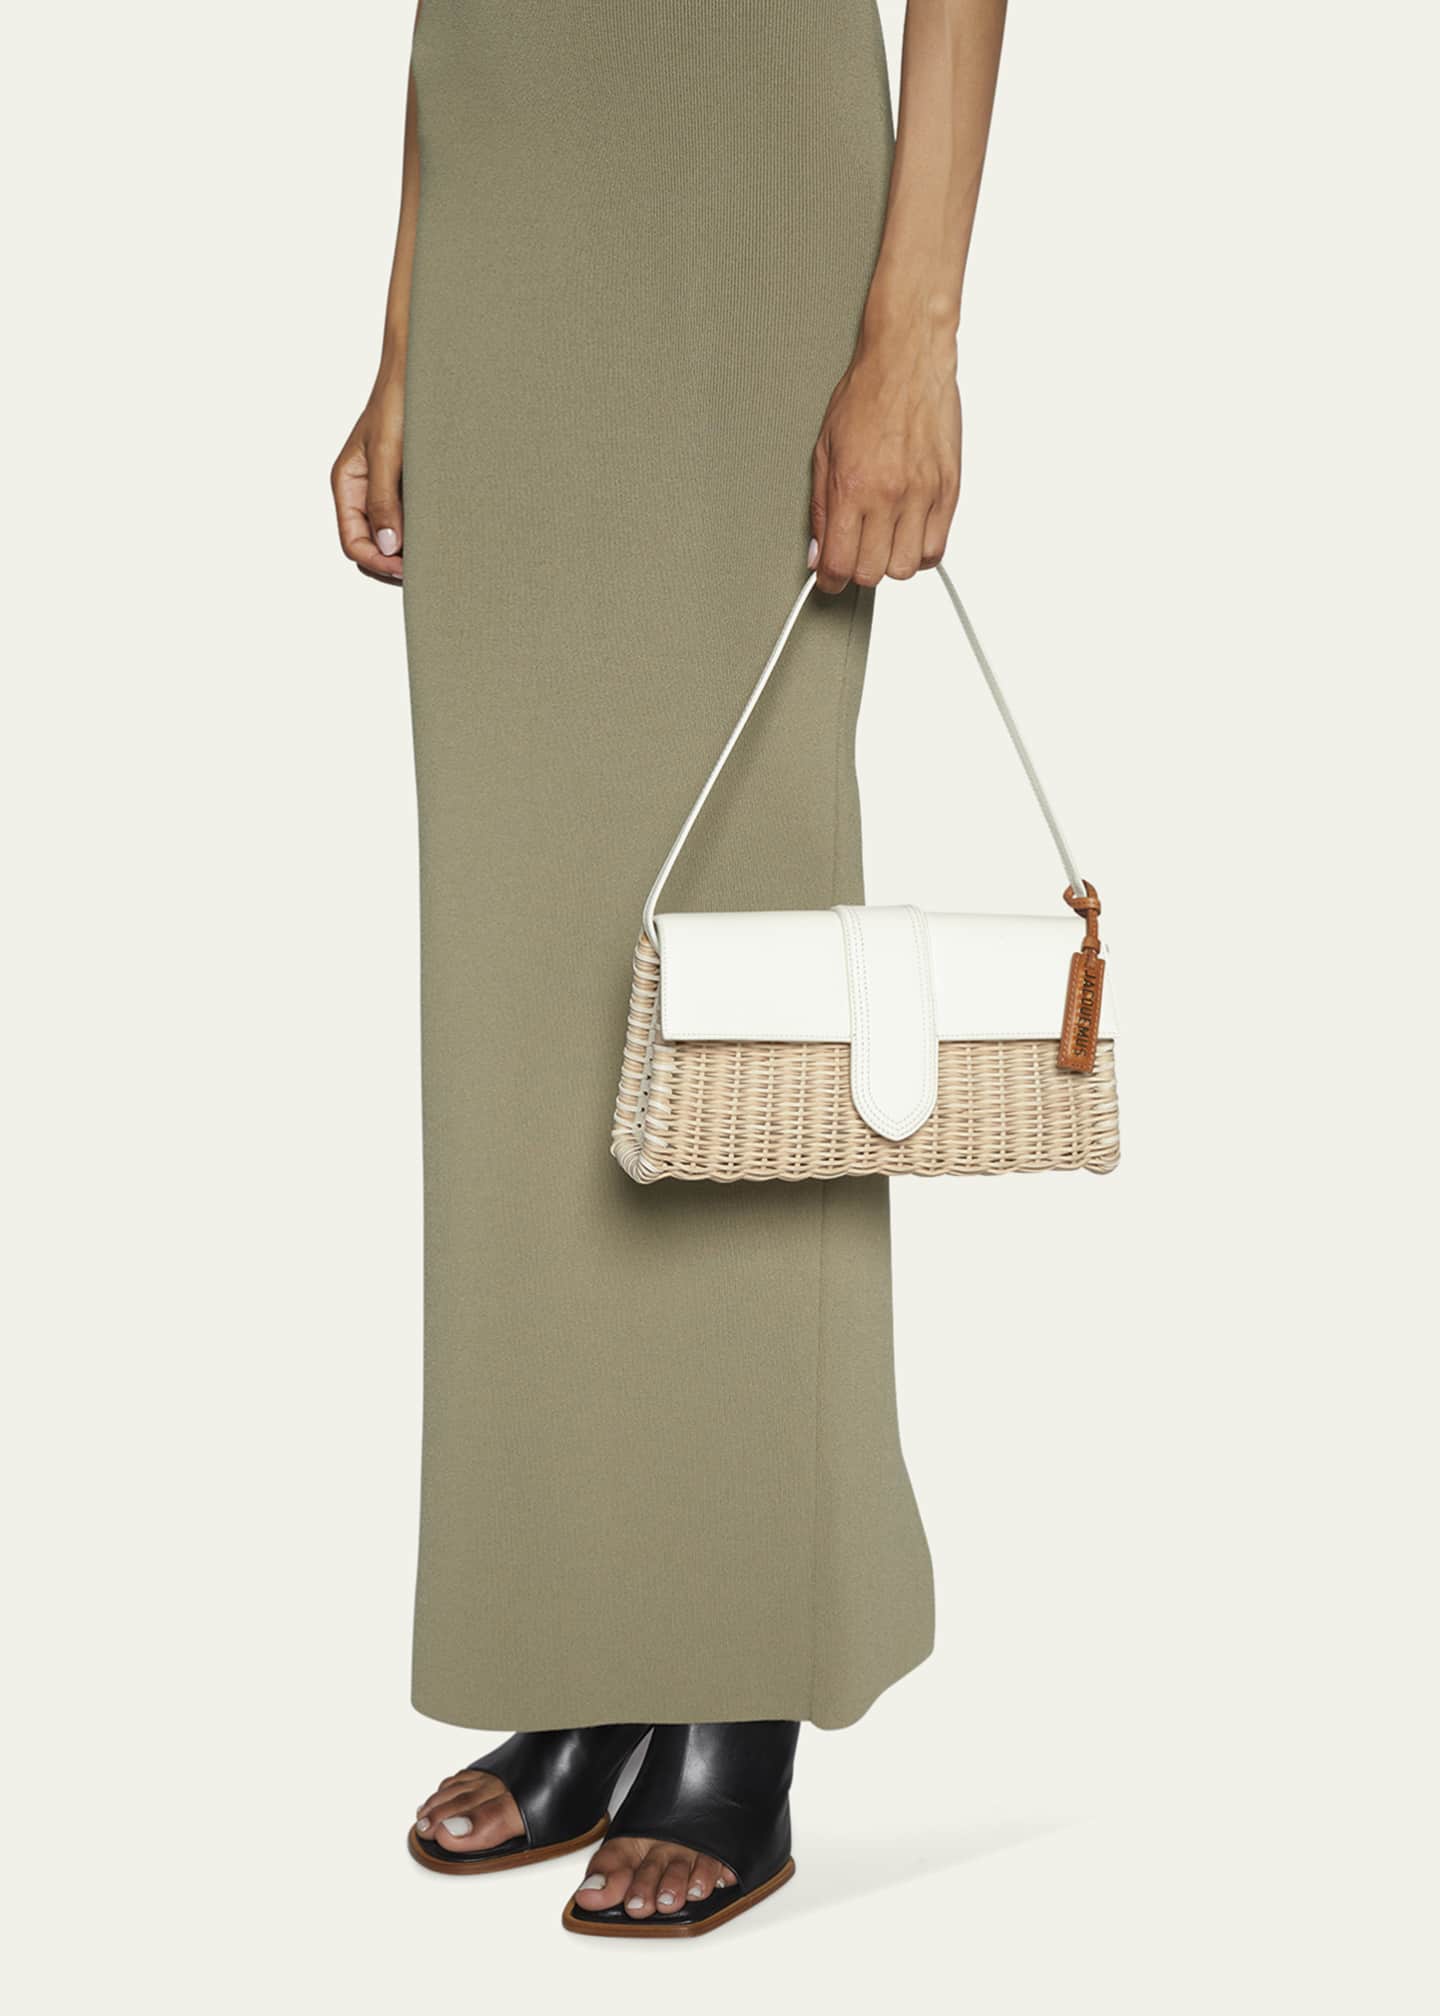 Jacquemus Le Bambino Long Osier Wicker Shoulder Bag, Ivory, Women's, Handbags & Purses Shoulder Bags